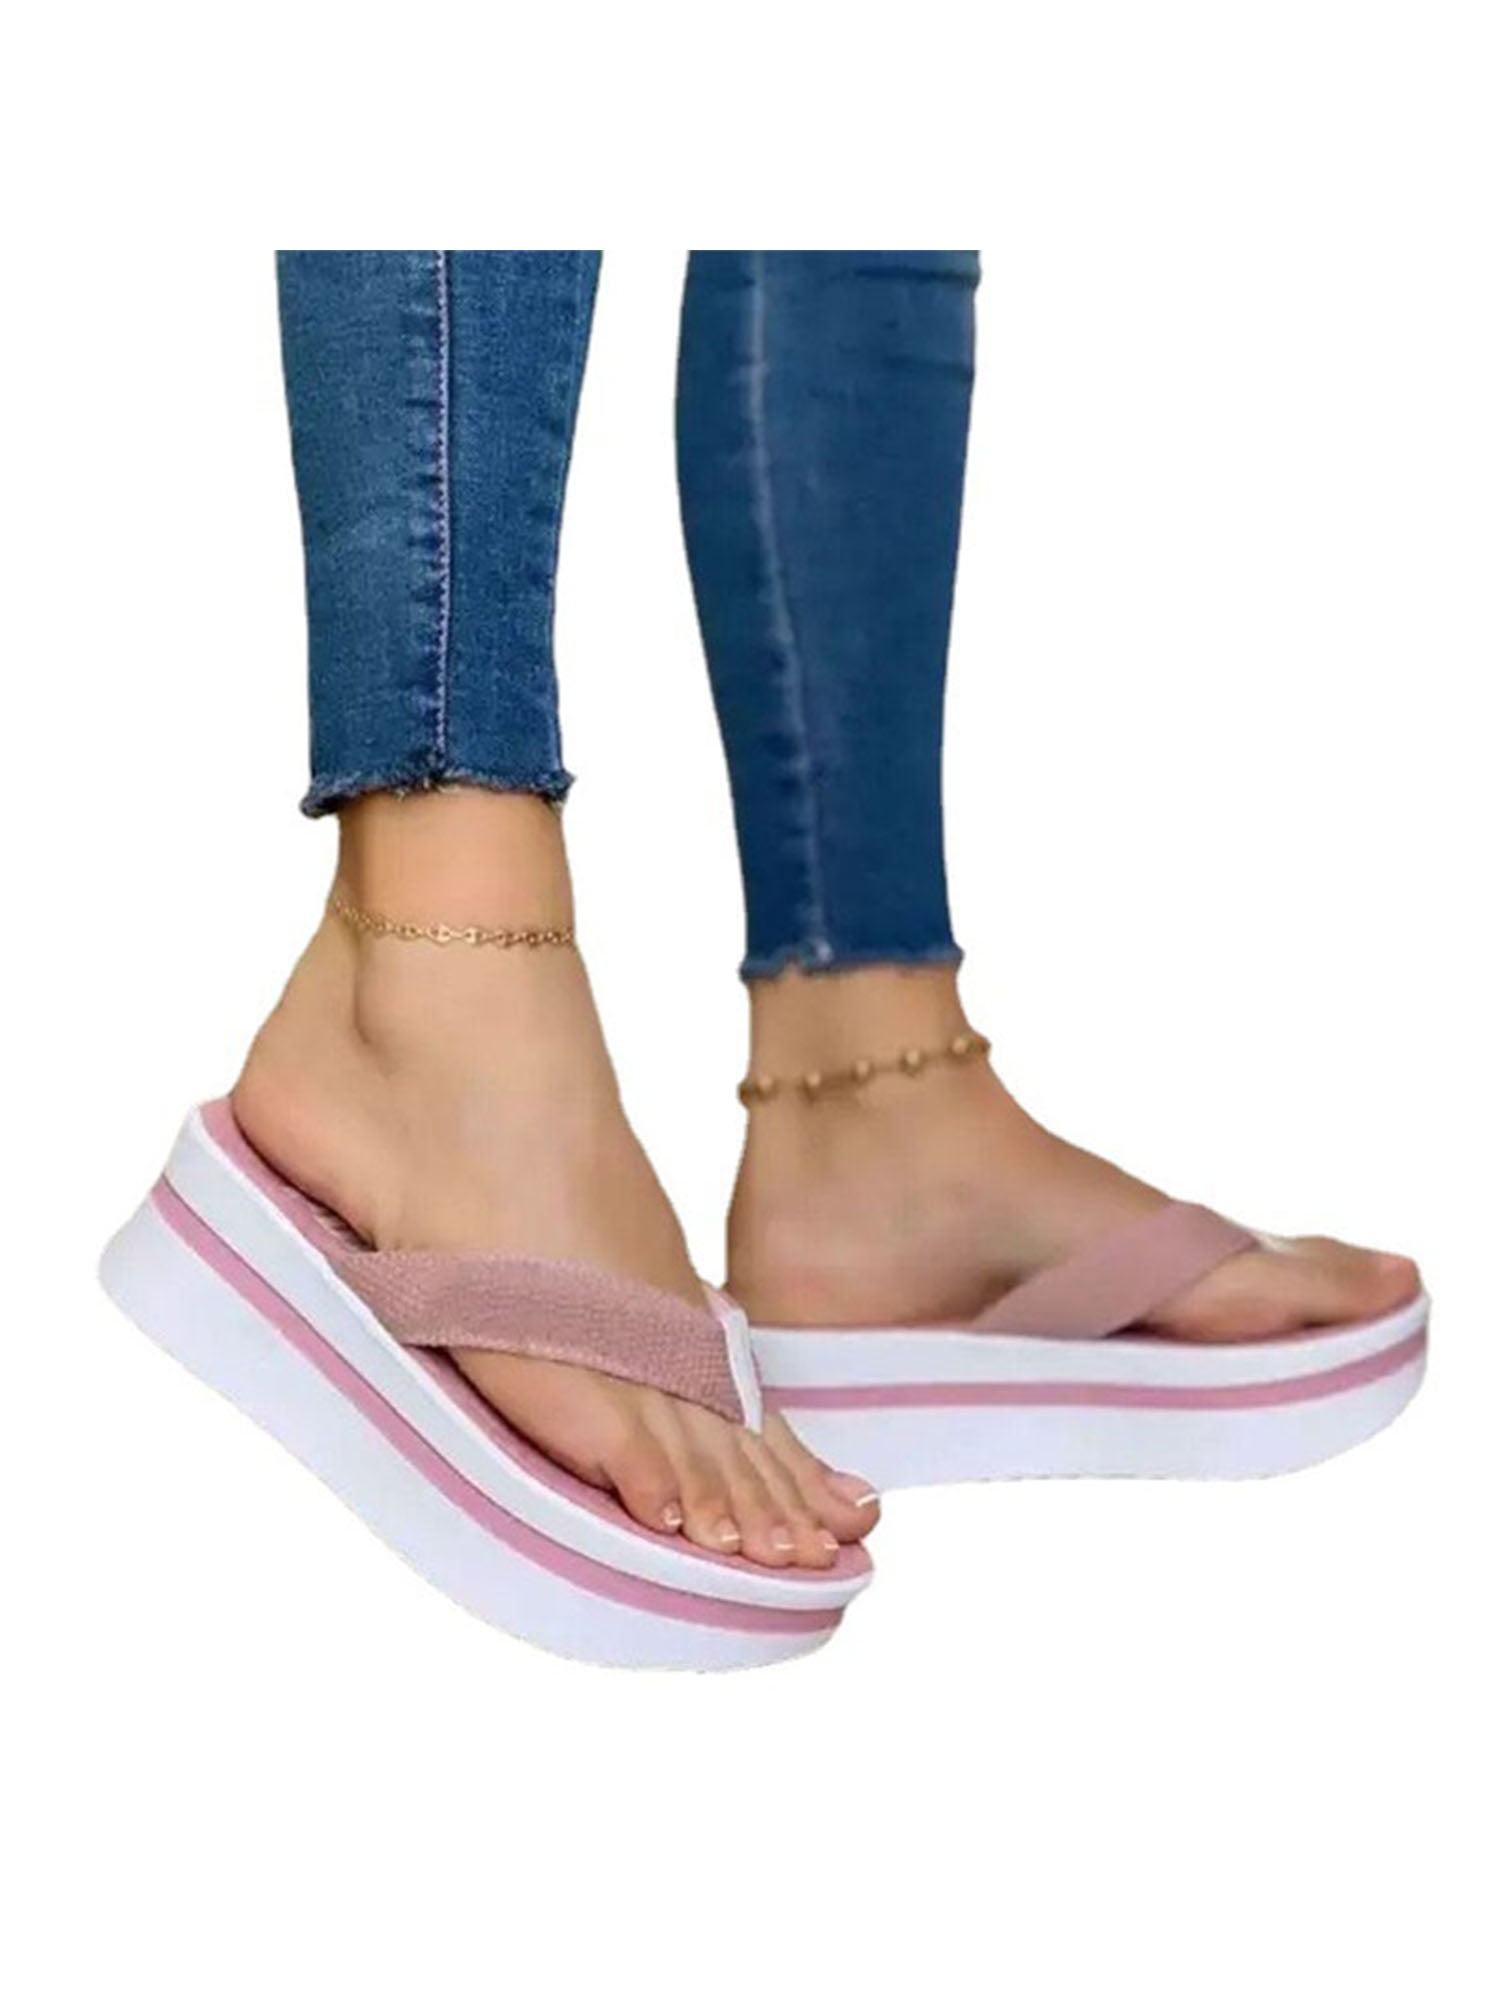 Women Flip Flops High Heel Slippers  Wedge Sandals Beach Street 5.5-10